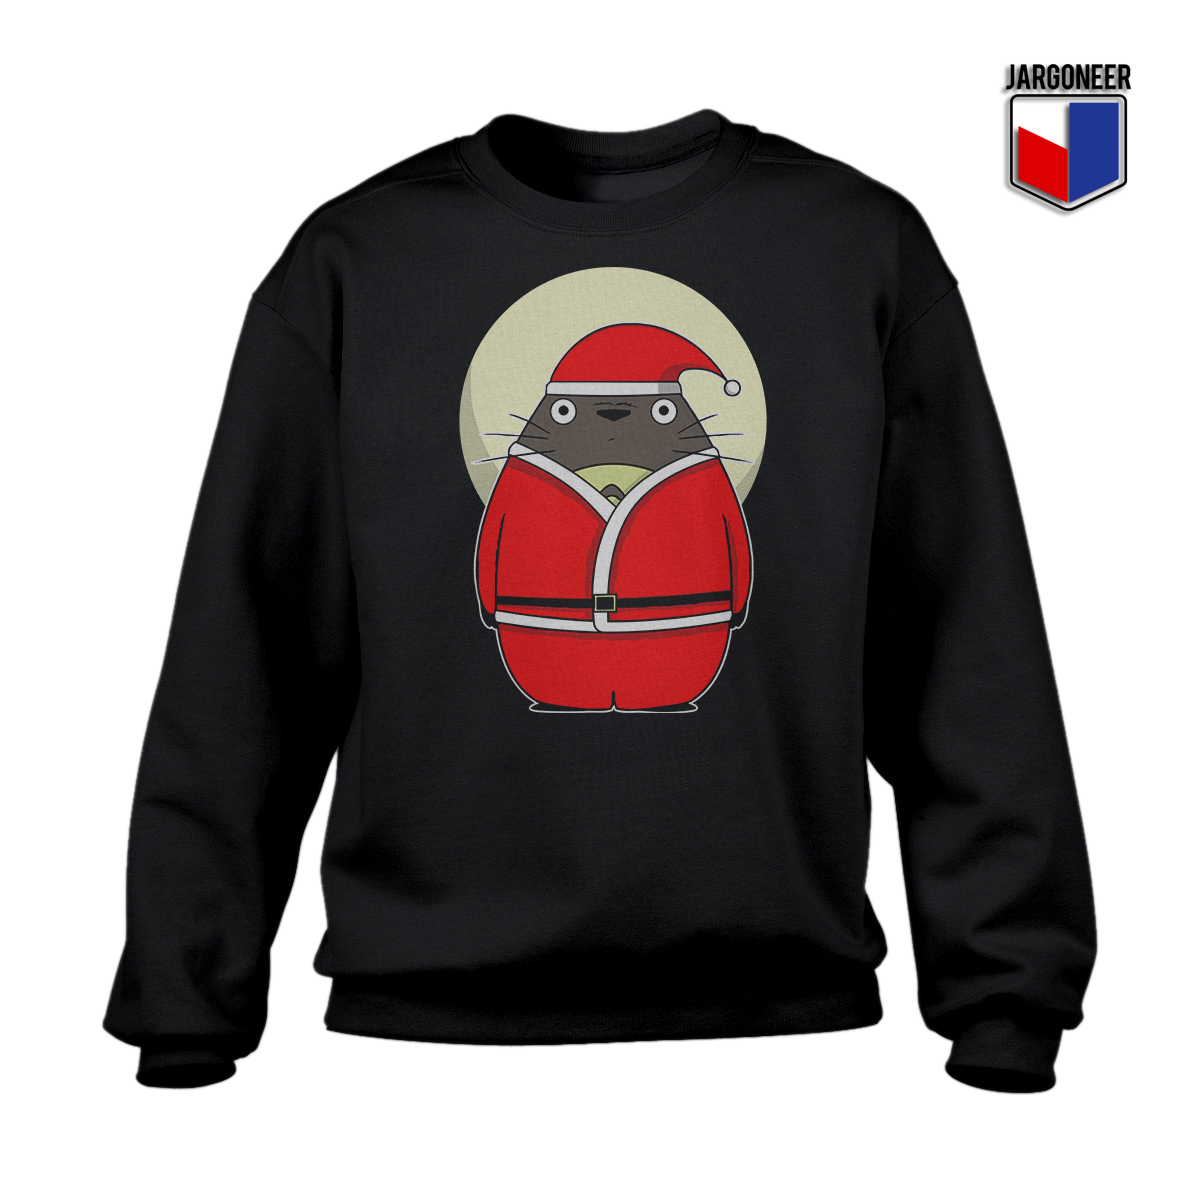 Santa Totoro Black SS - Shop Unique Graphic Cool Shirt Designs